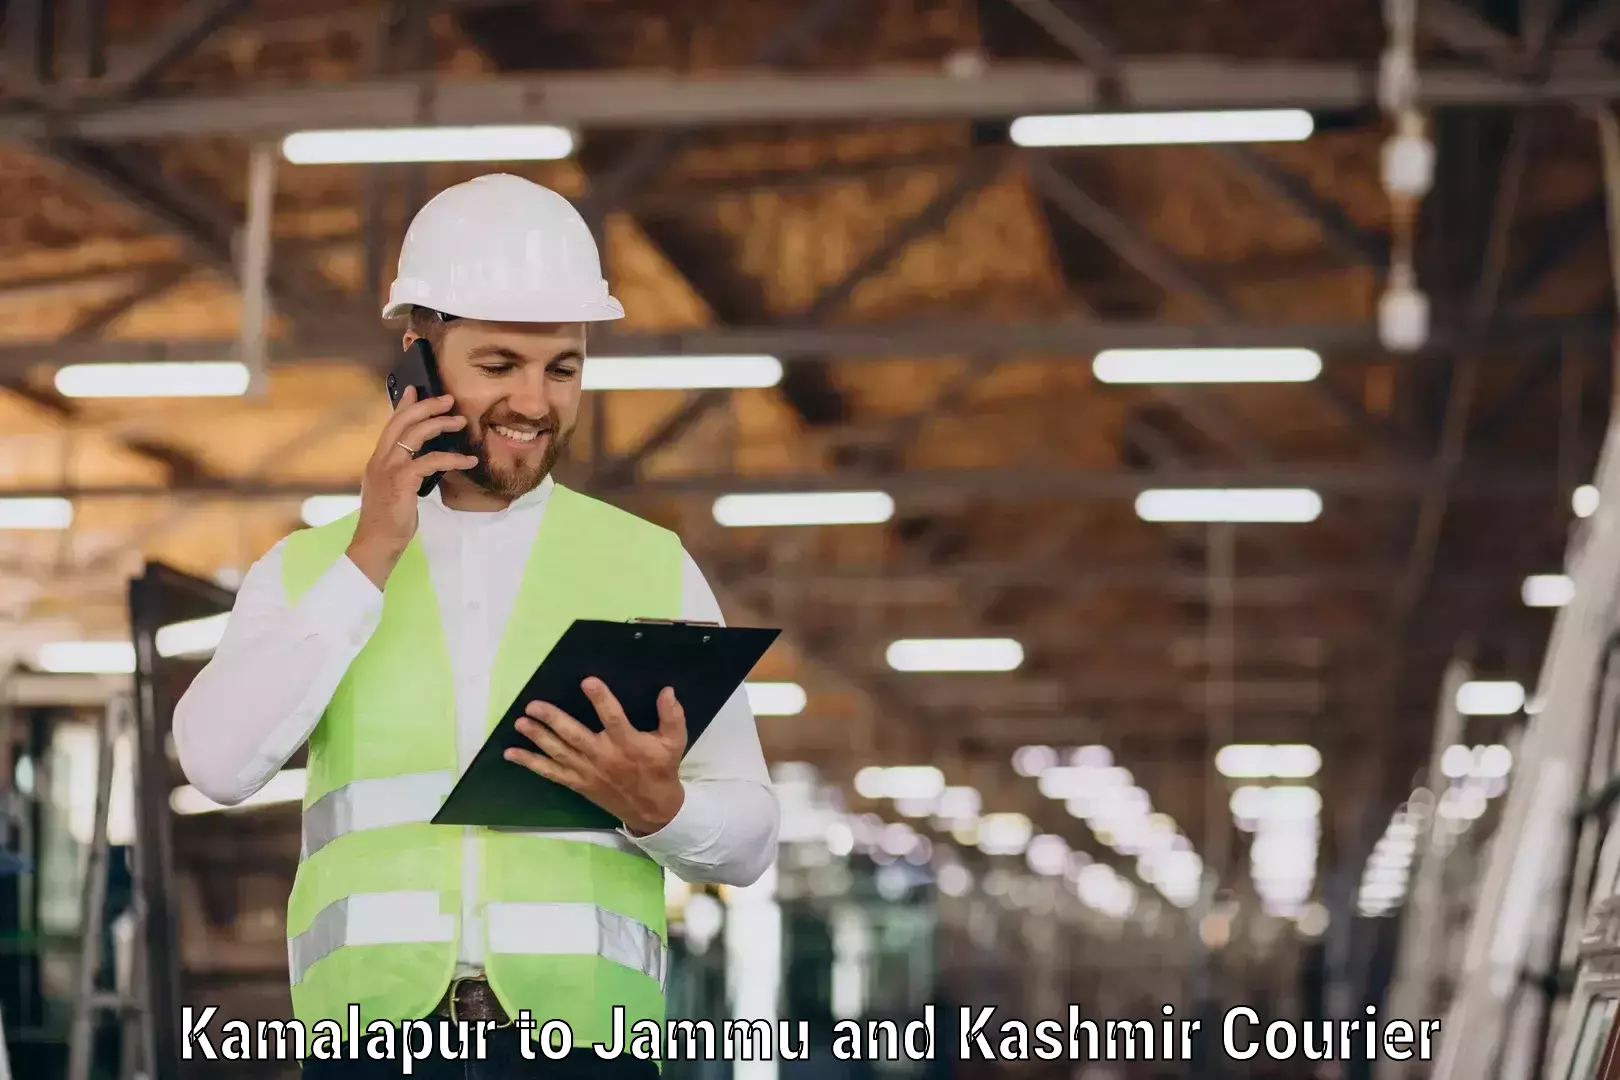 Express delivery network Kamalapur to University of Jammu